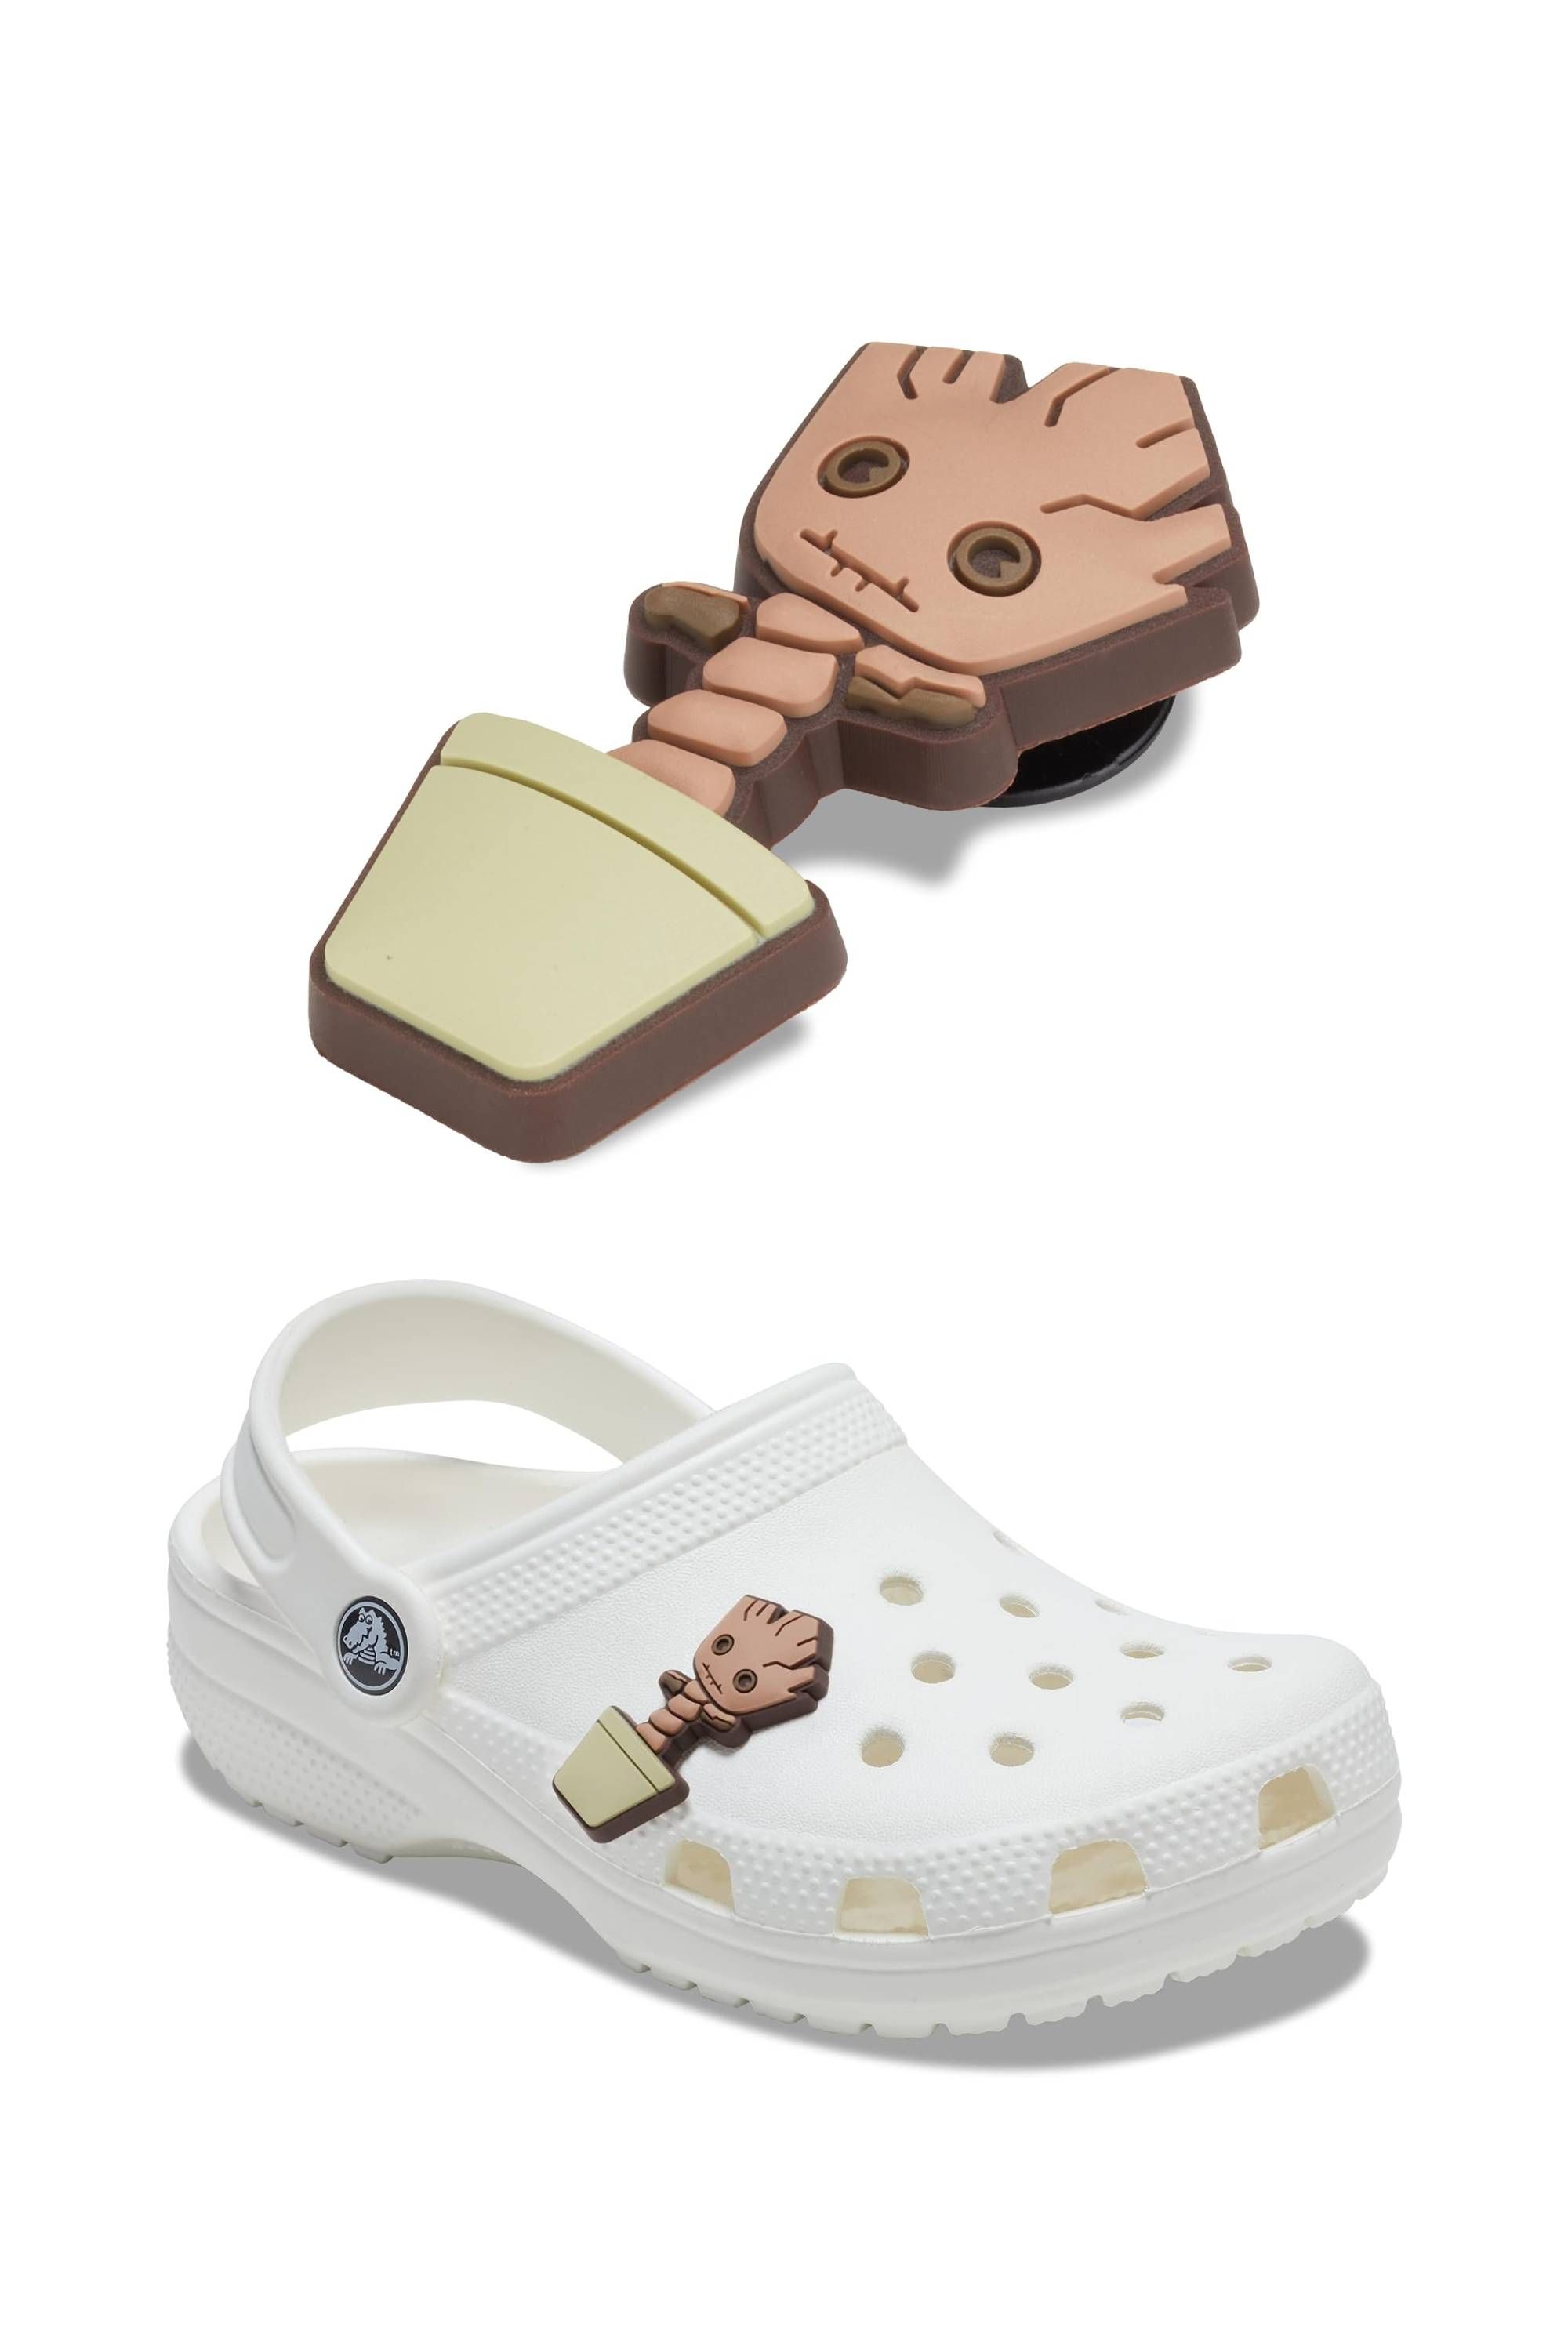 Price-Wise Wonder Crocs™ Plant Daddy Jibbitz Shoe Charm Set for